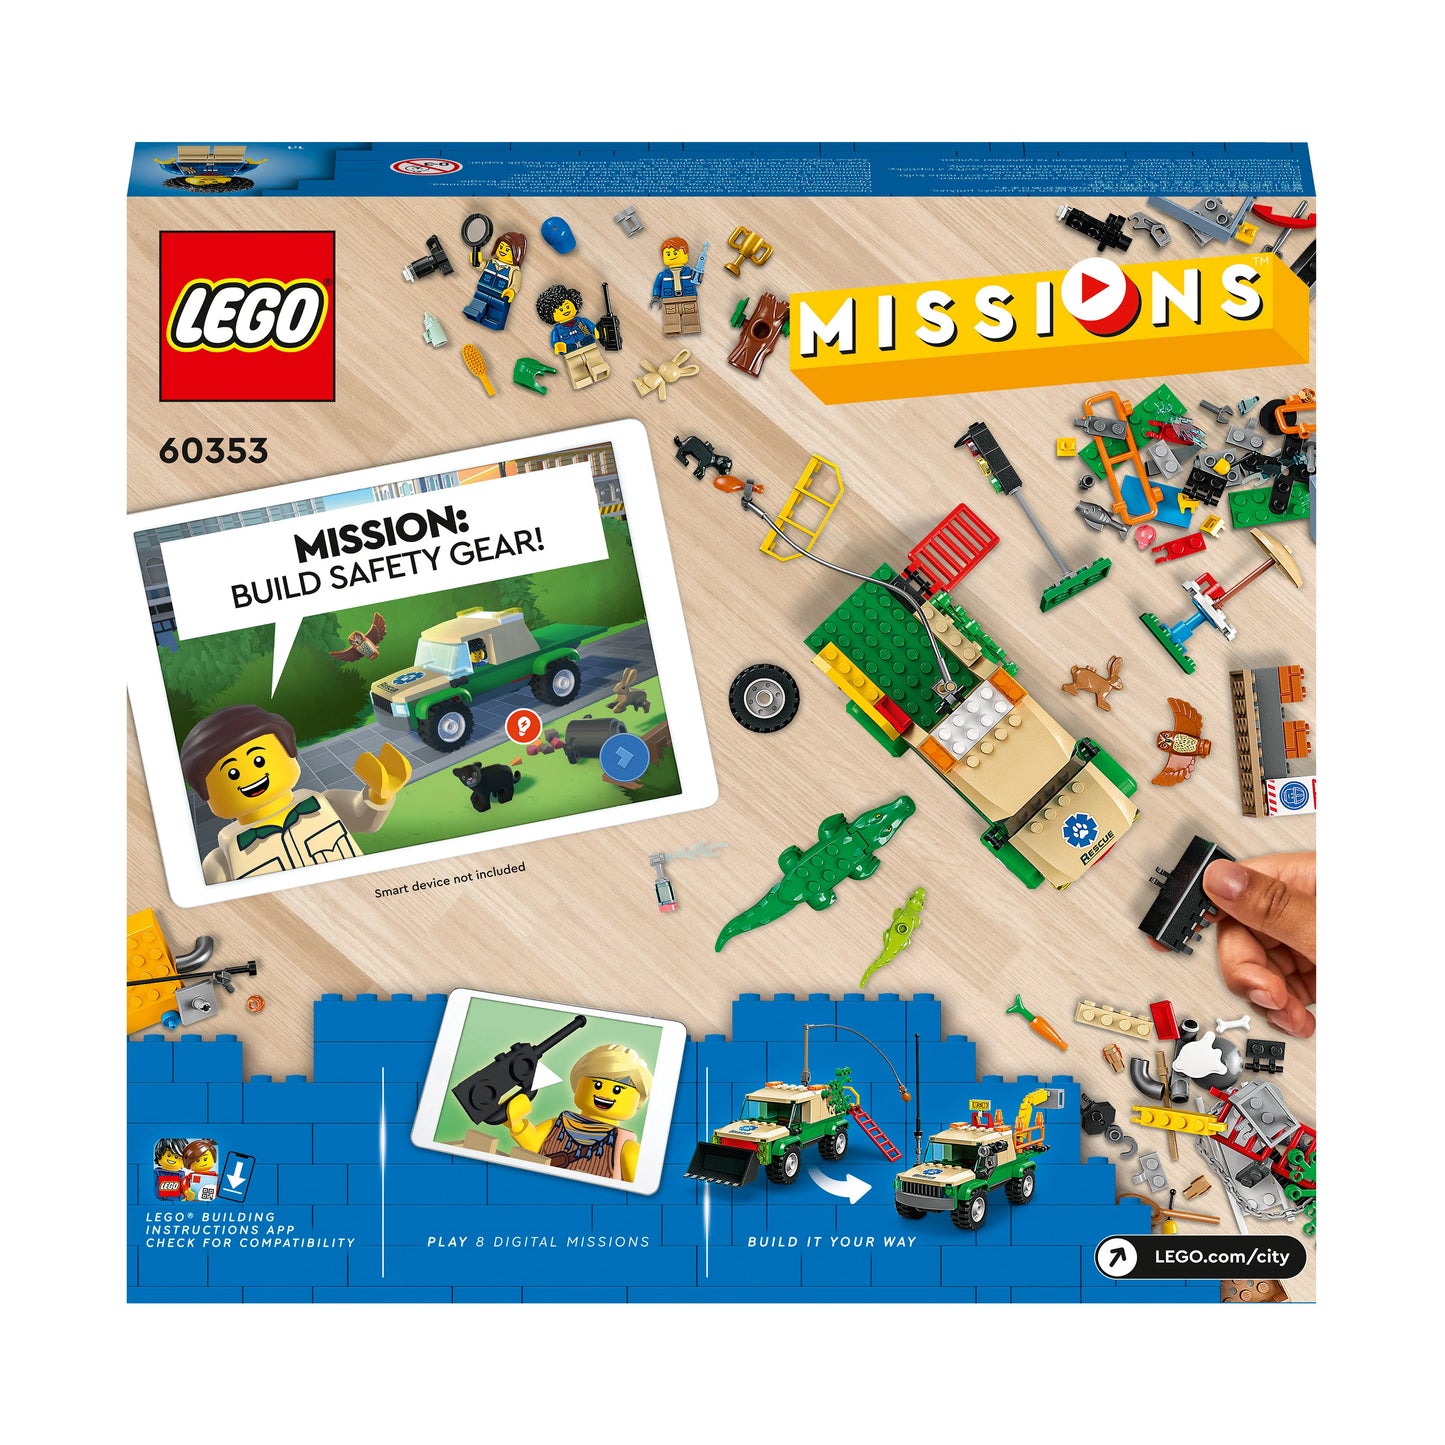 Wilde dieren reddingsmissies-LEGO City